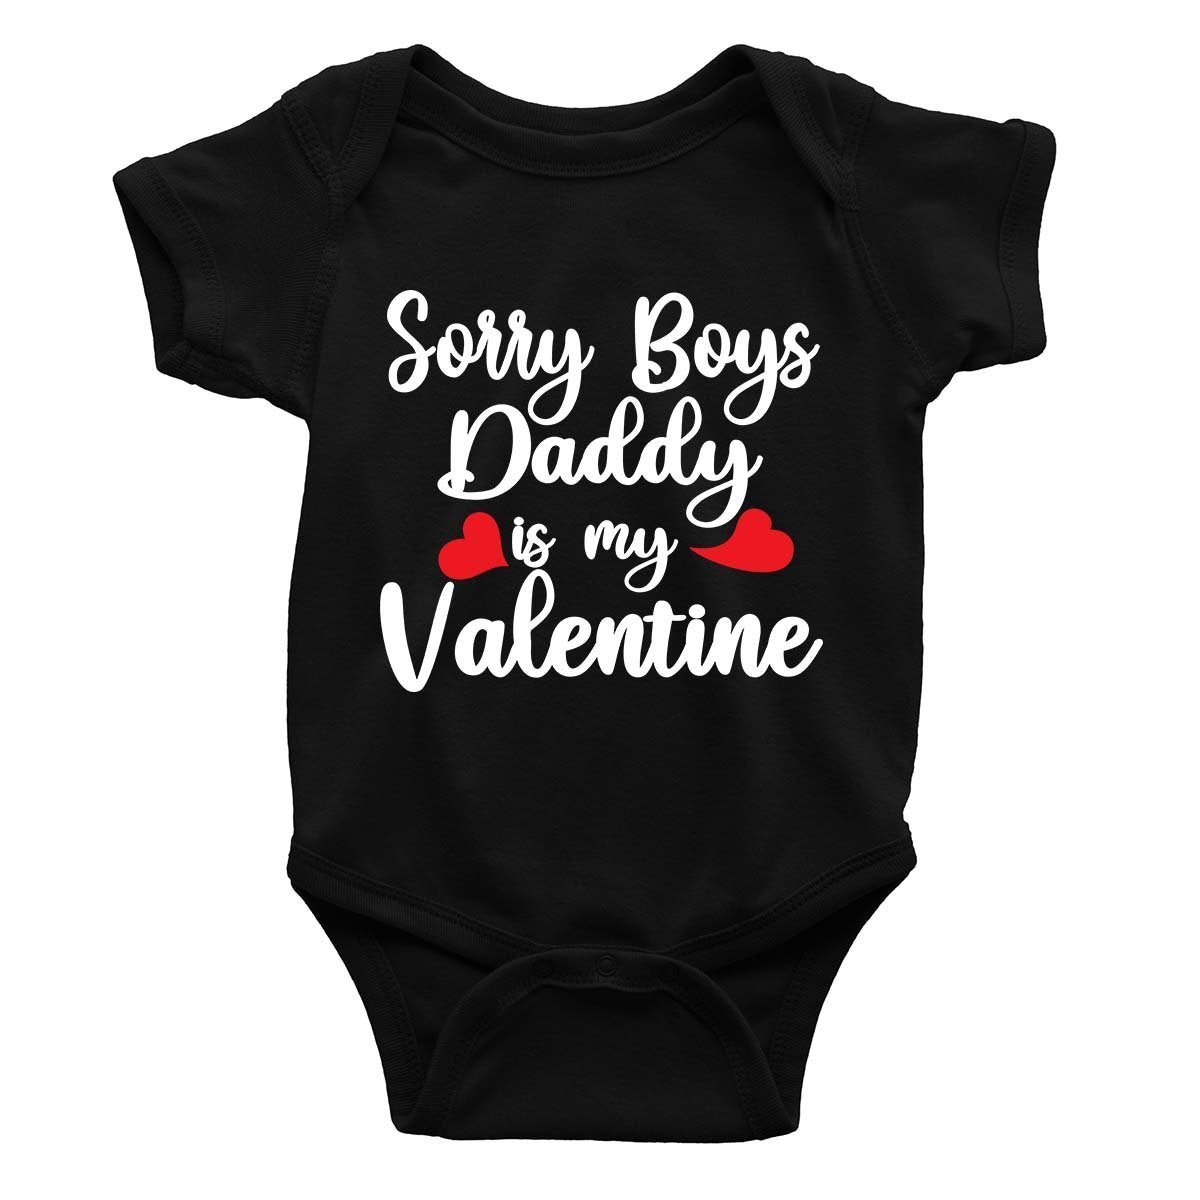 jopo Sorry Boys Daddy is my valentine romper black